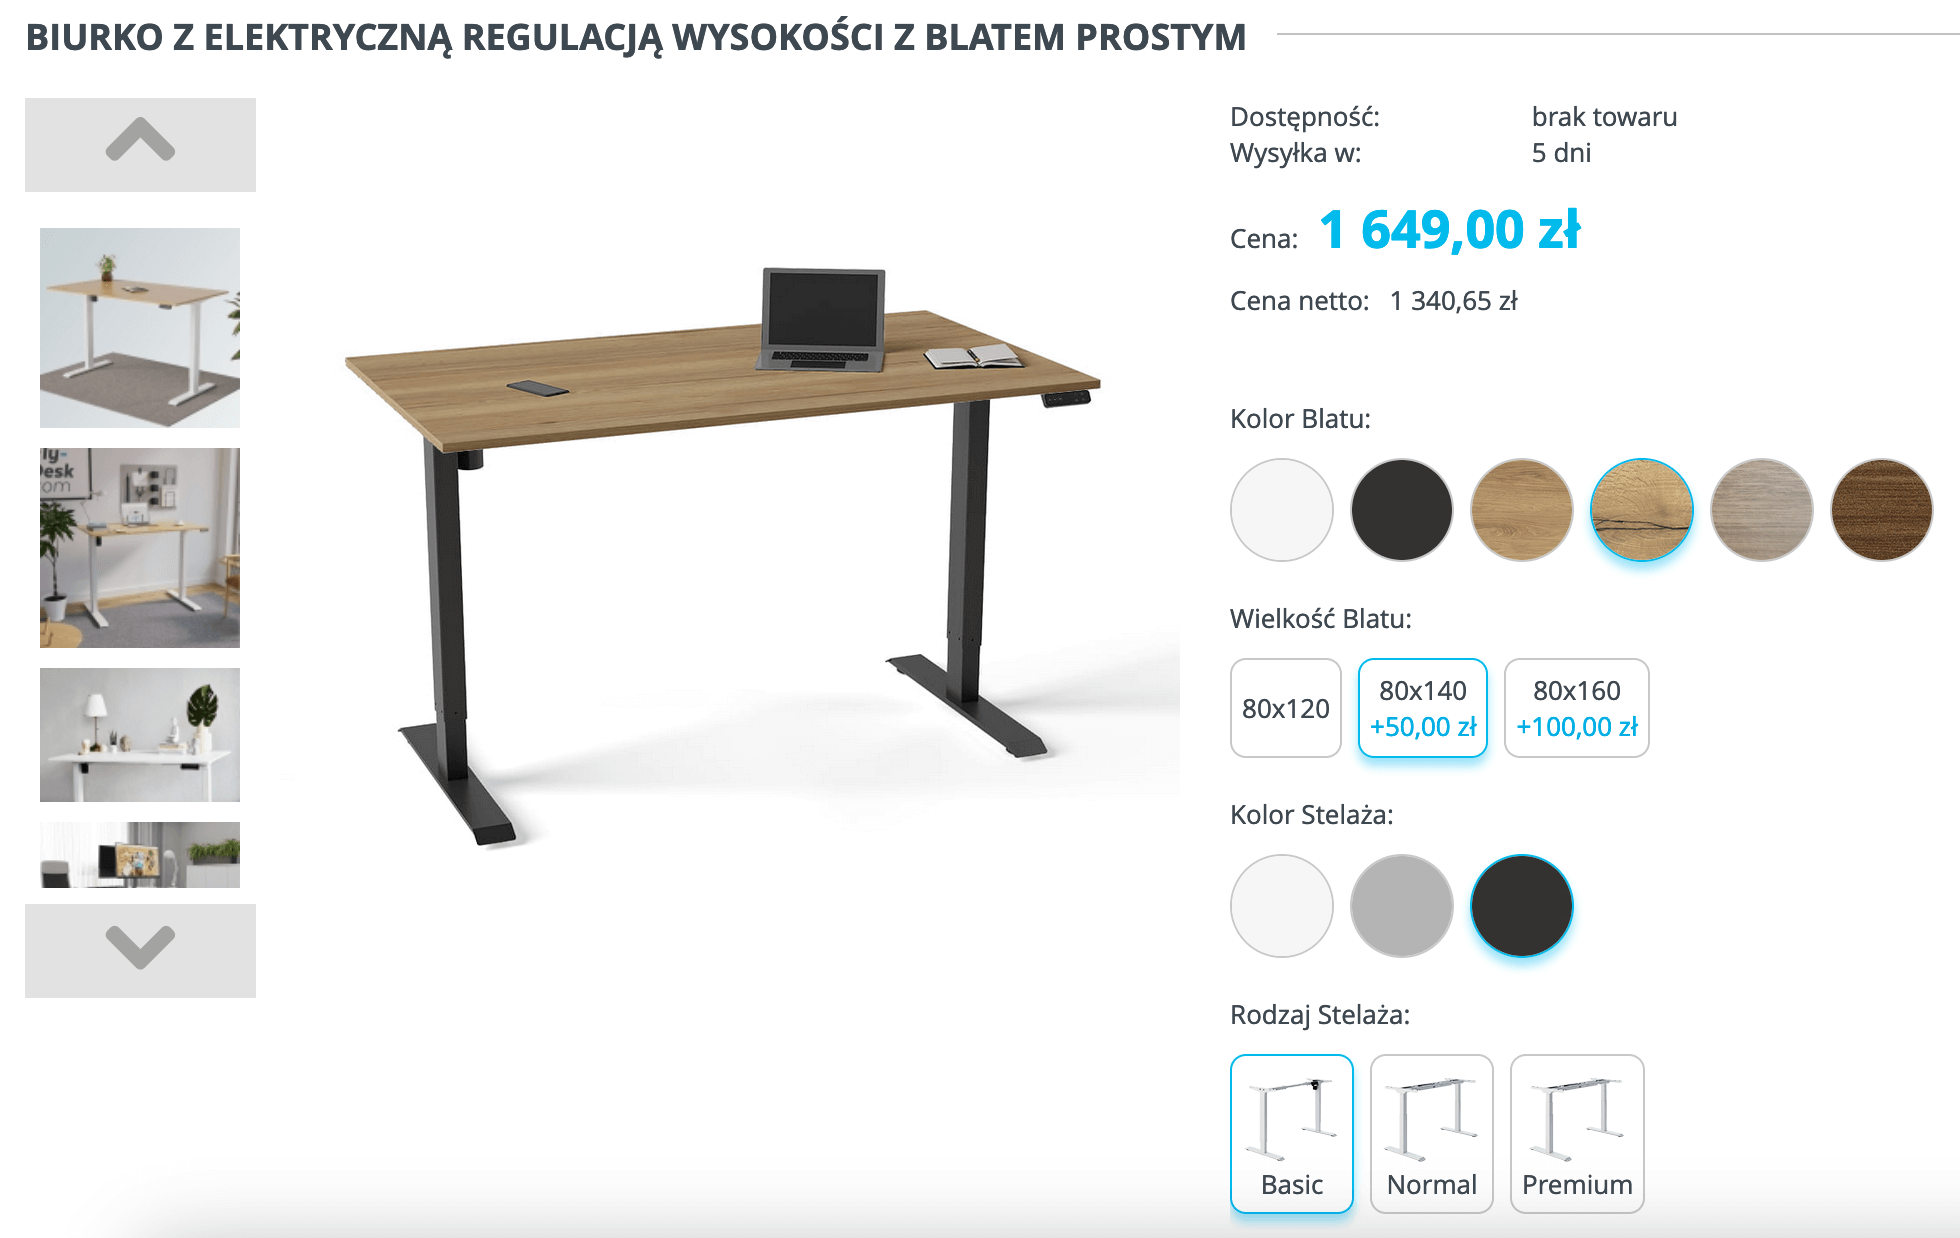 Personalizacja biurka na fly-desk.com